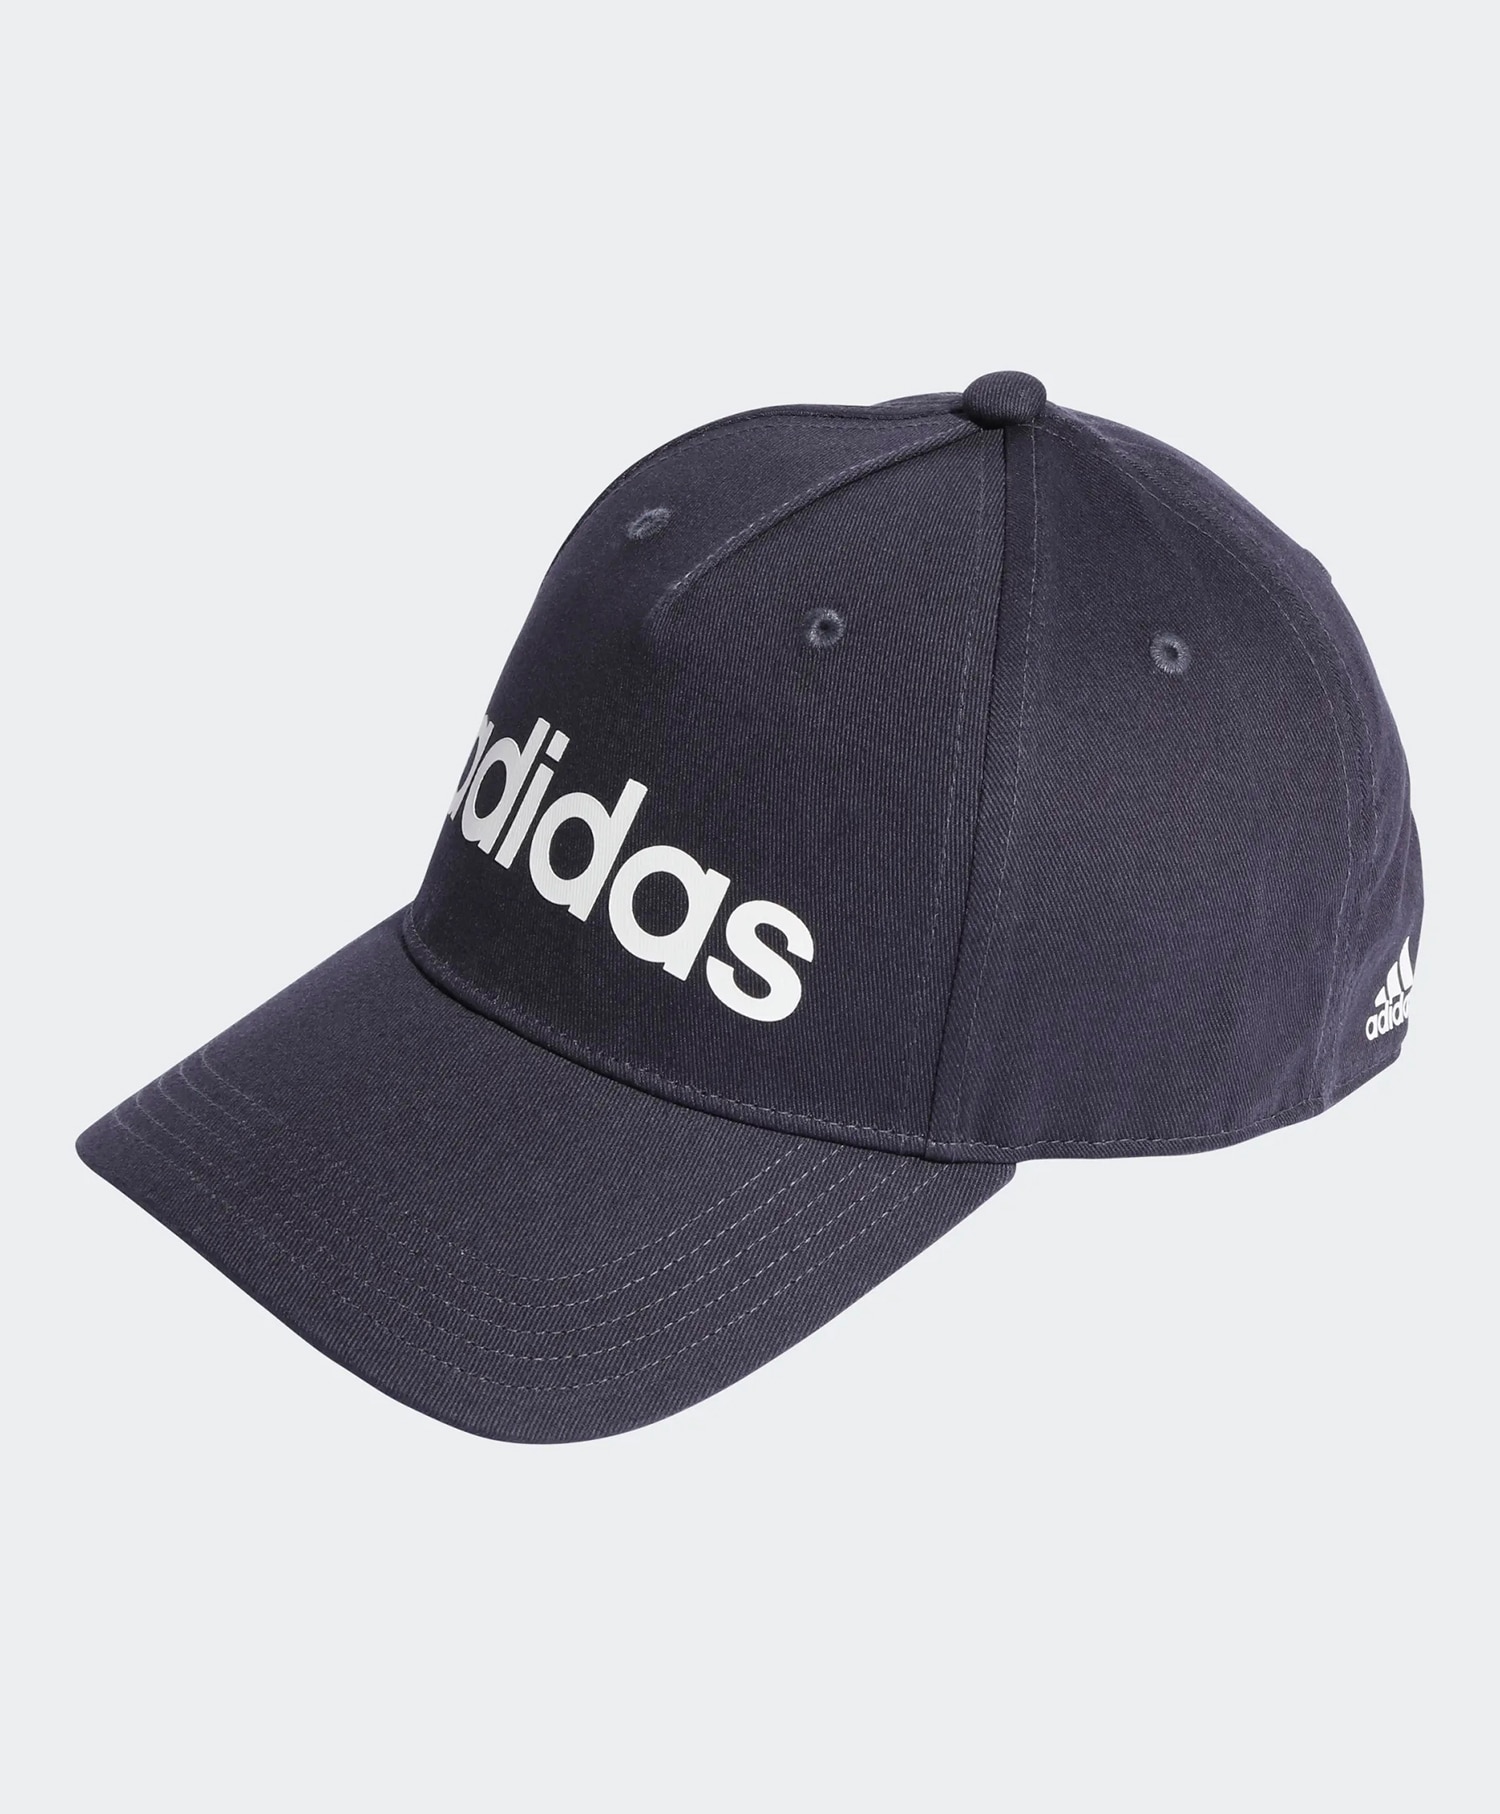 Adidas Daily Caps